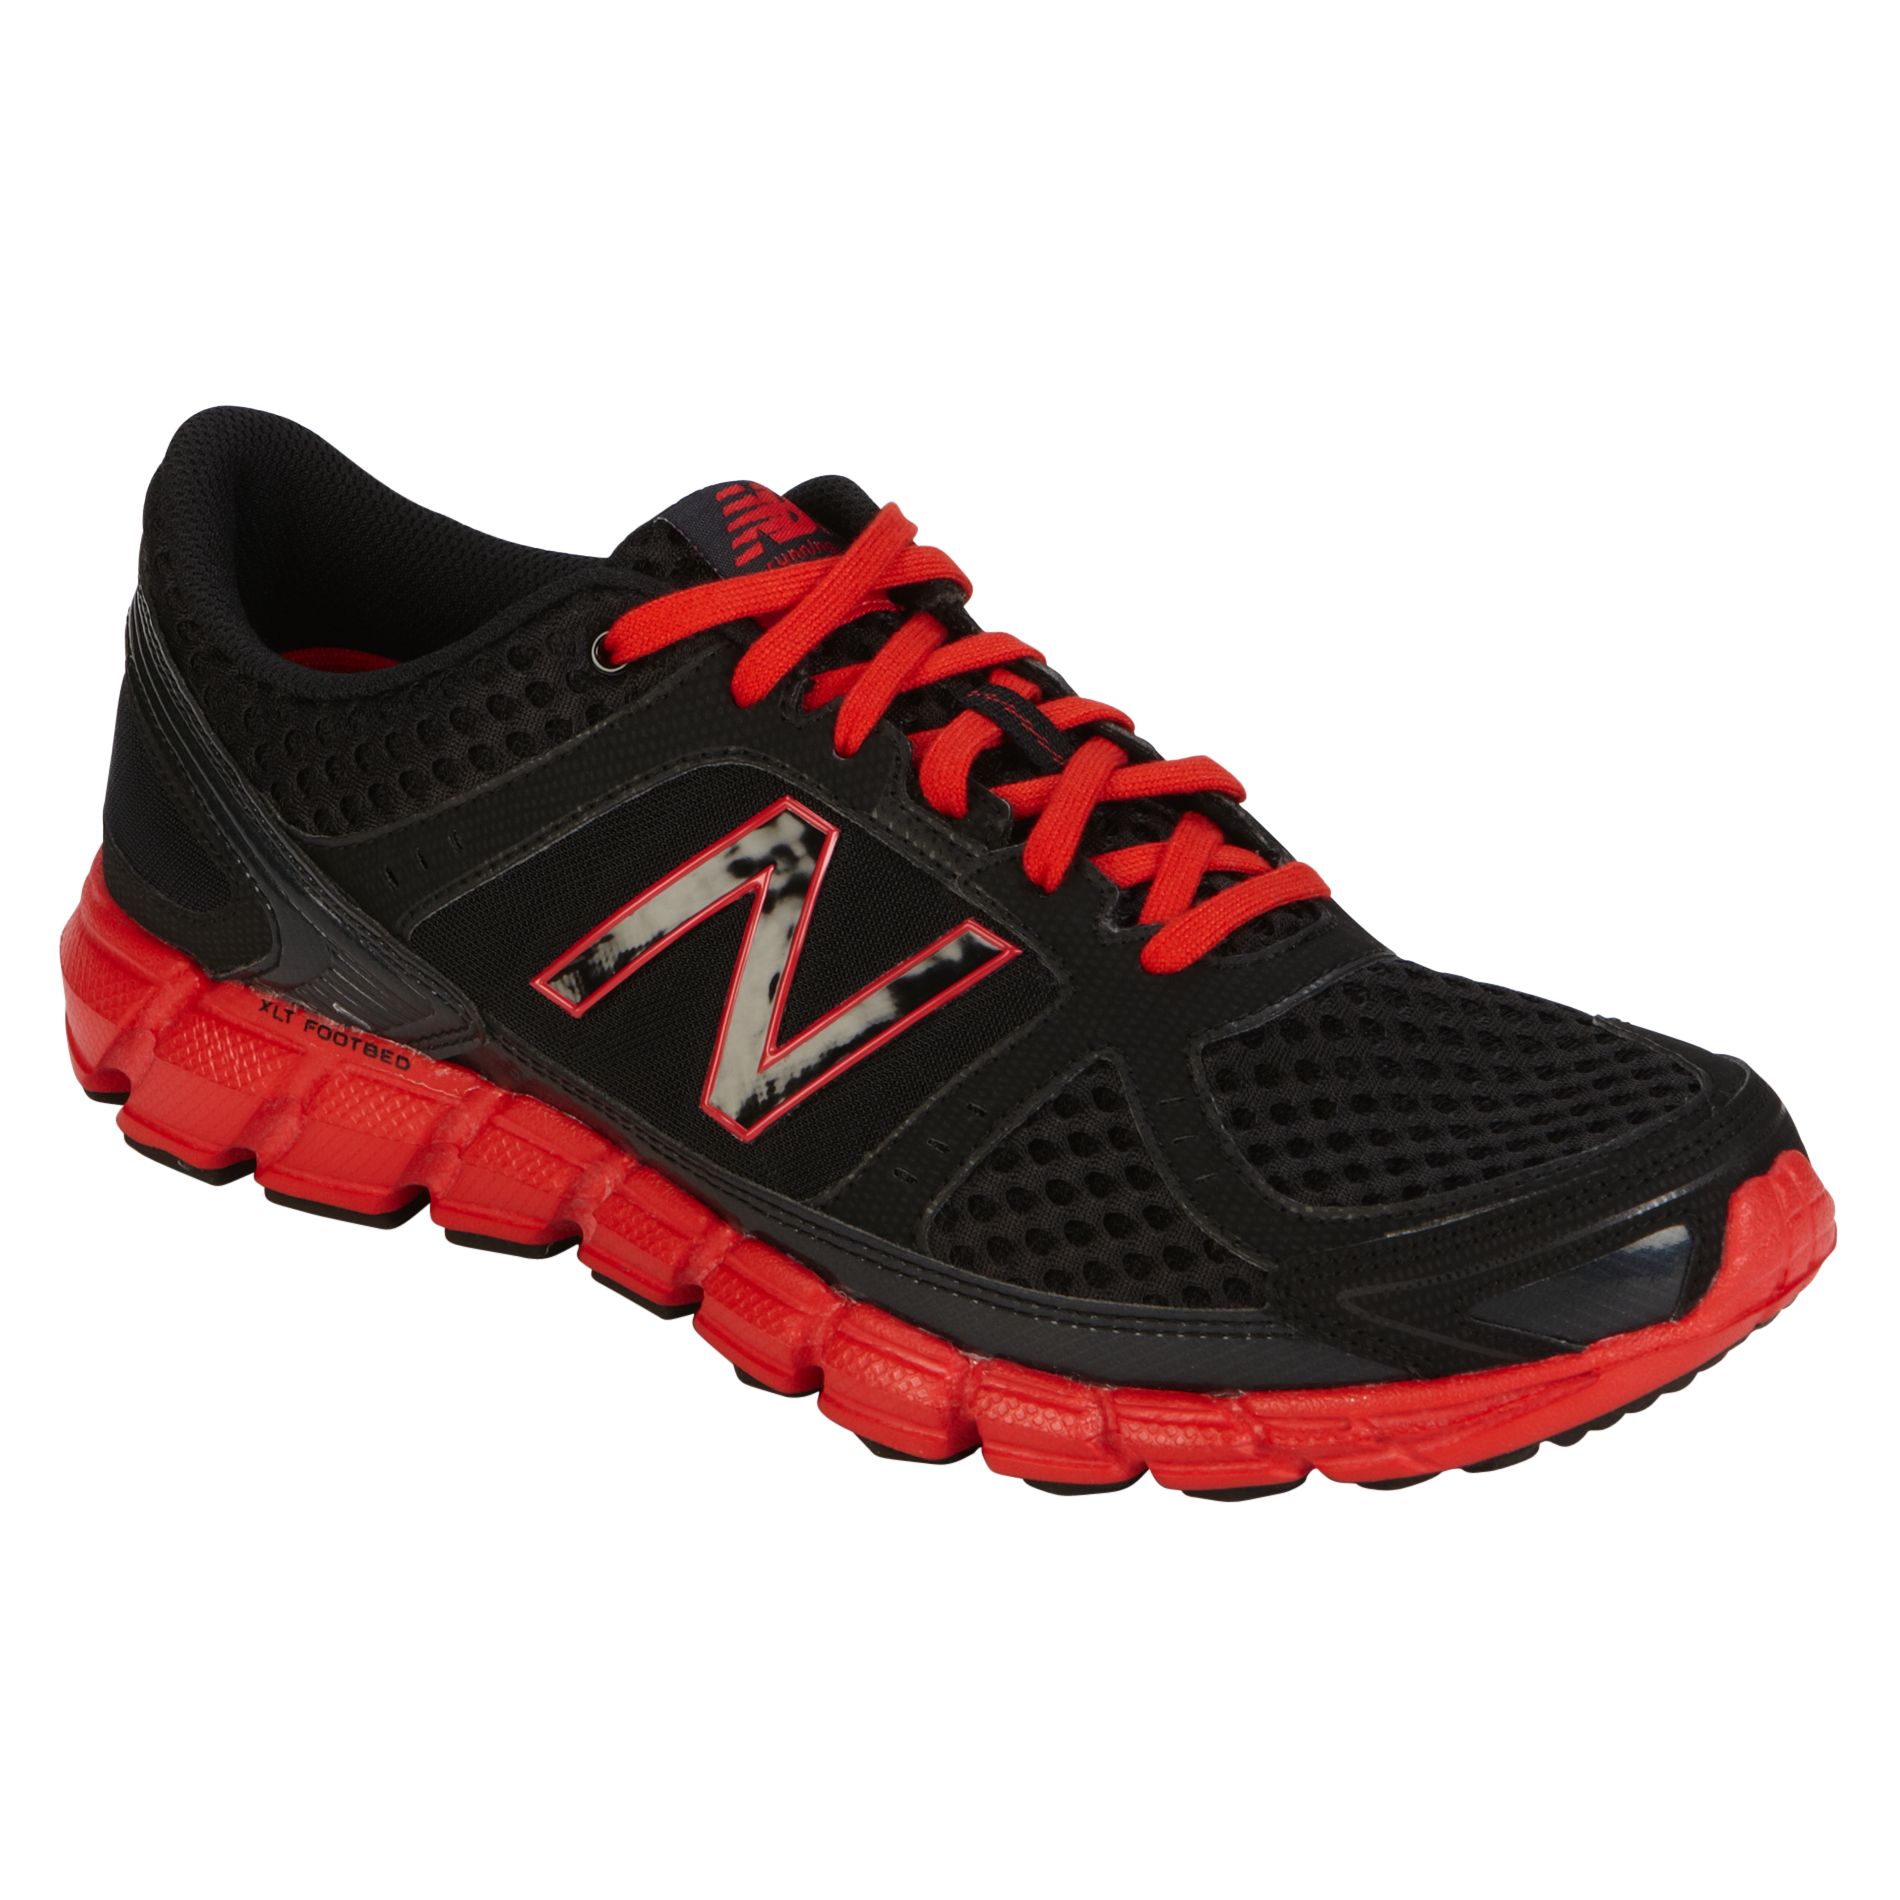 New Balance Men's 750V1 Running Athletic Shoe Wide Width - Black/Red